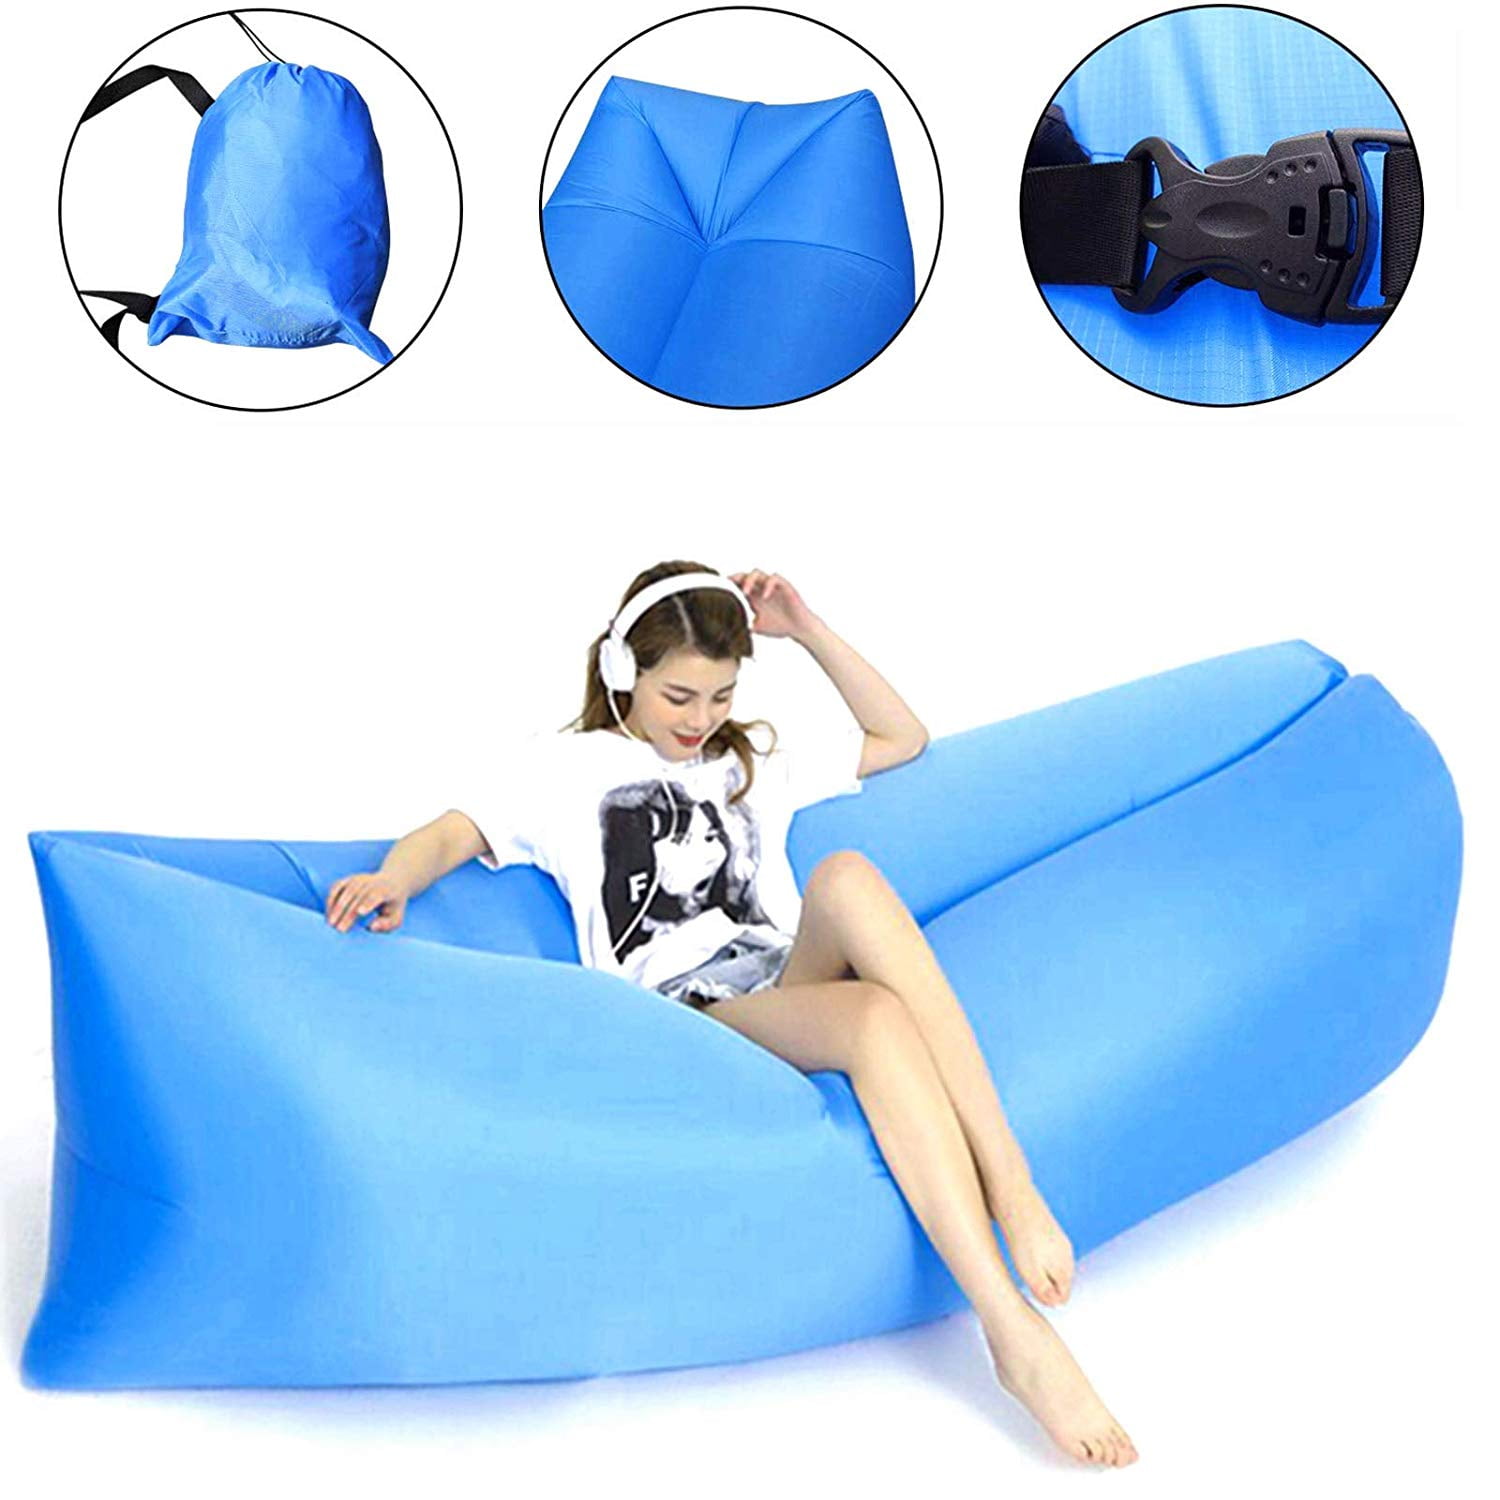 Inflatable Lounger Air Sofa Beach Chair Camping Chairs or Portable Hammock 